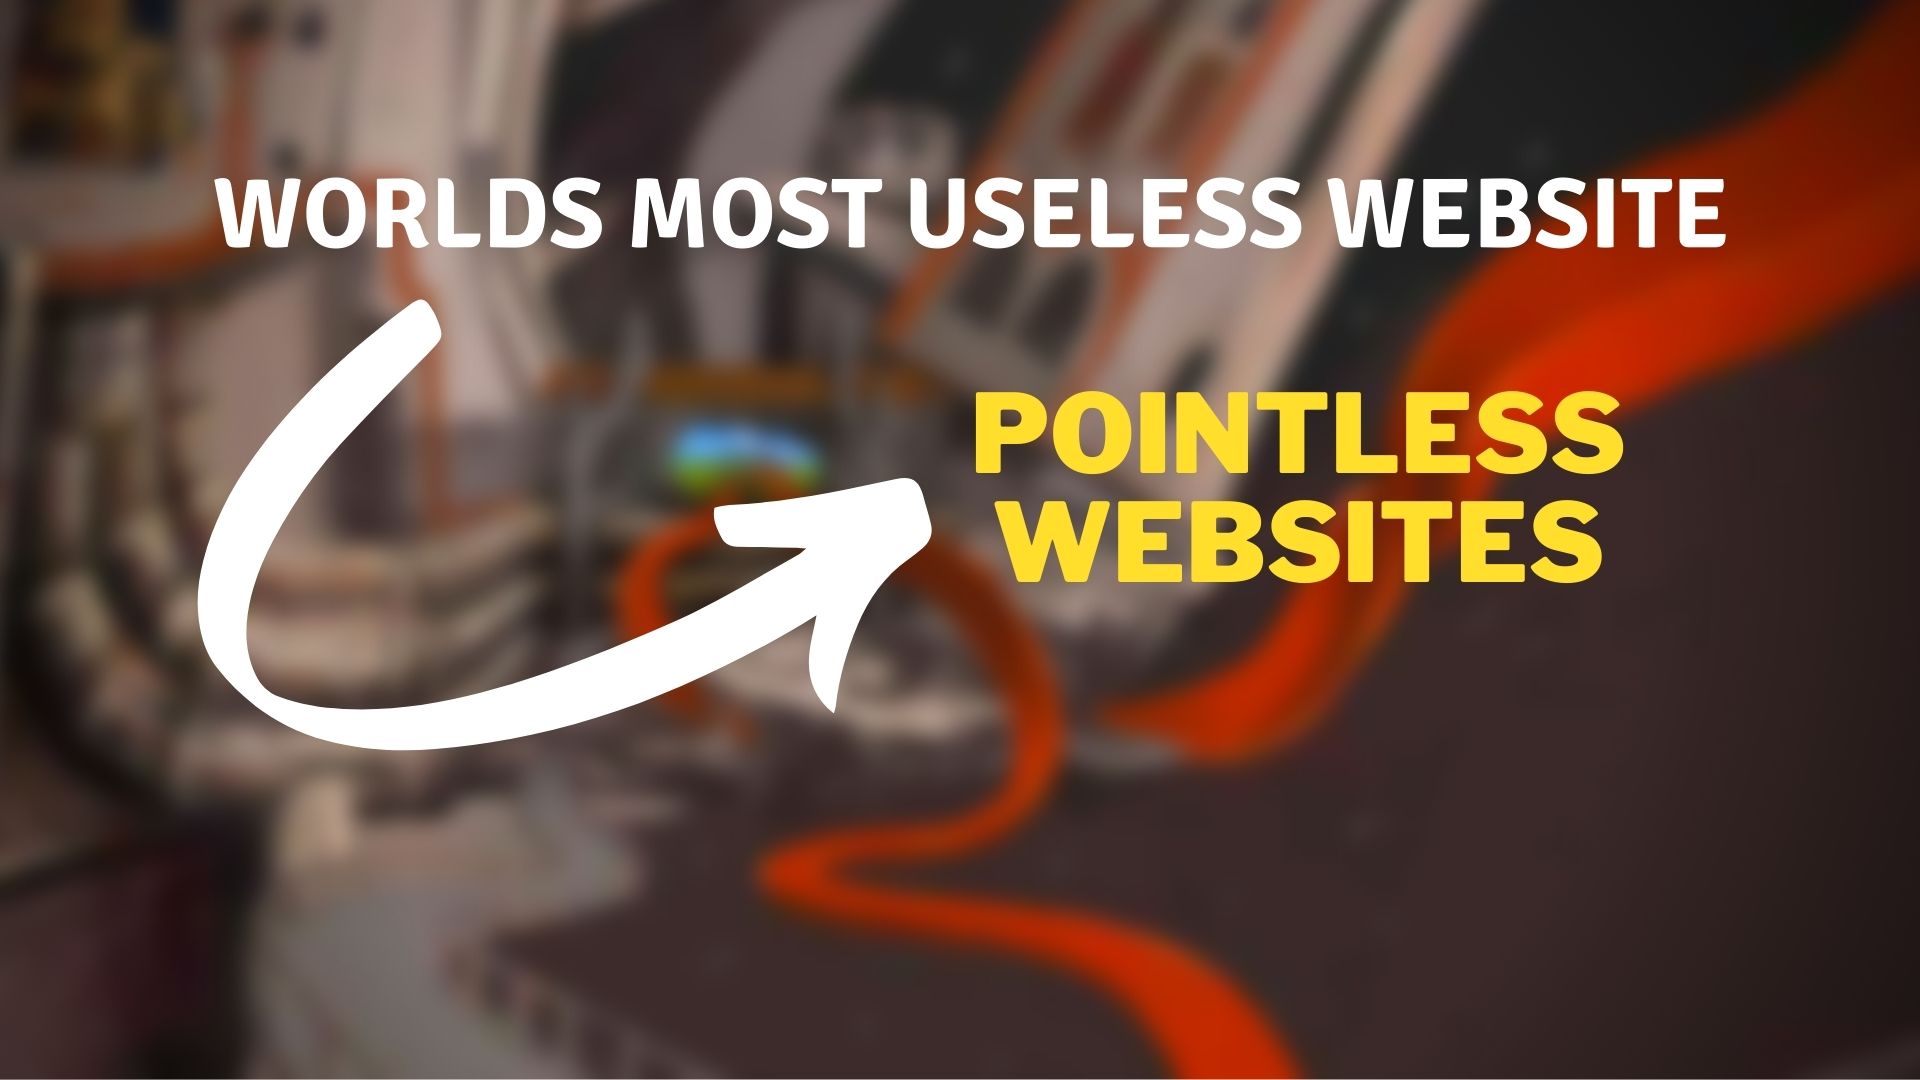 Pointless websites Worlds most useless website